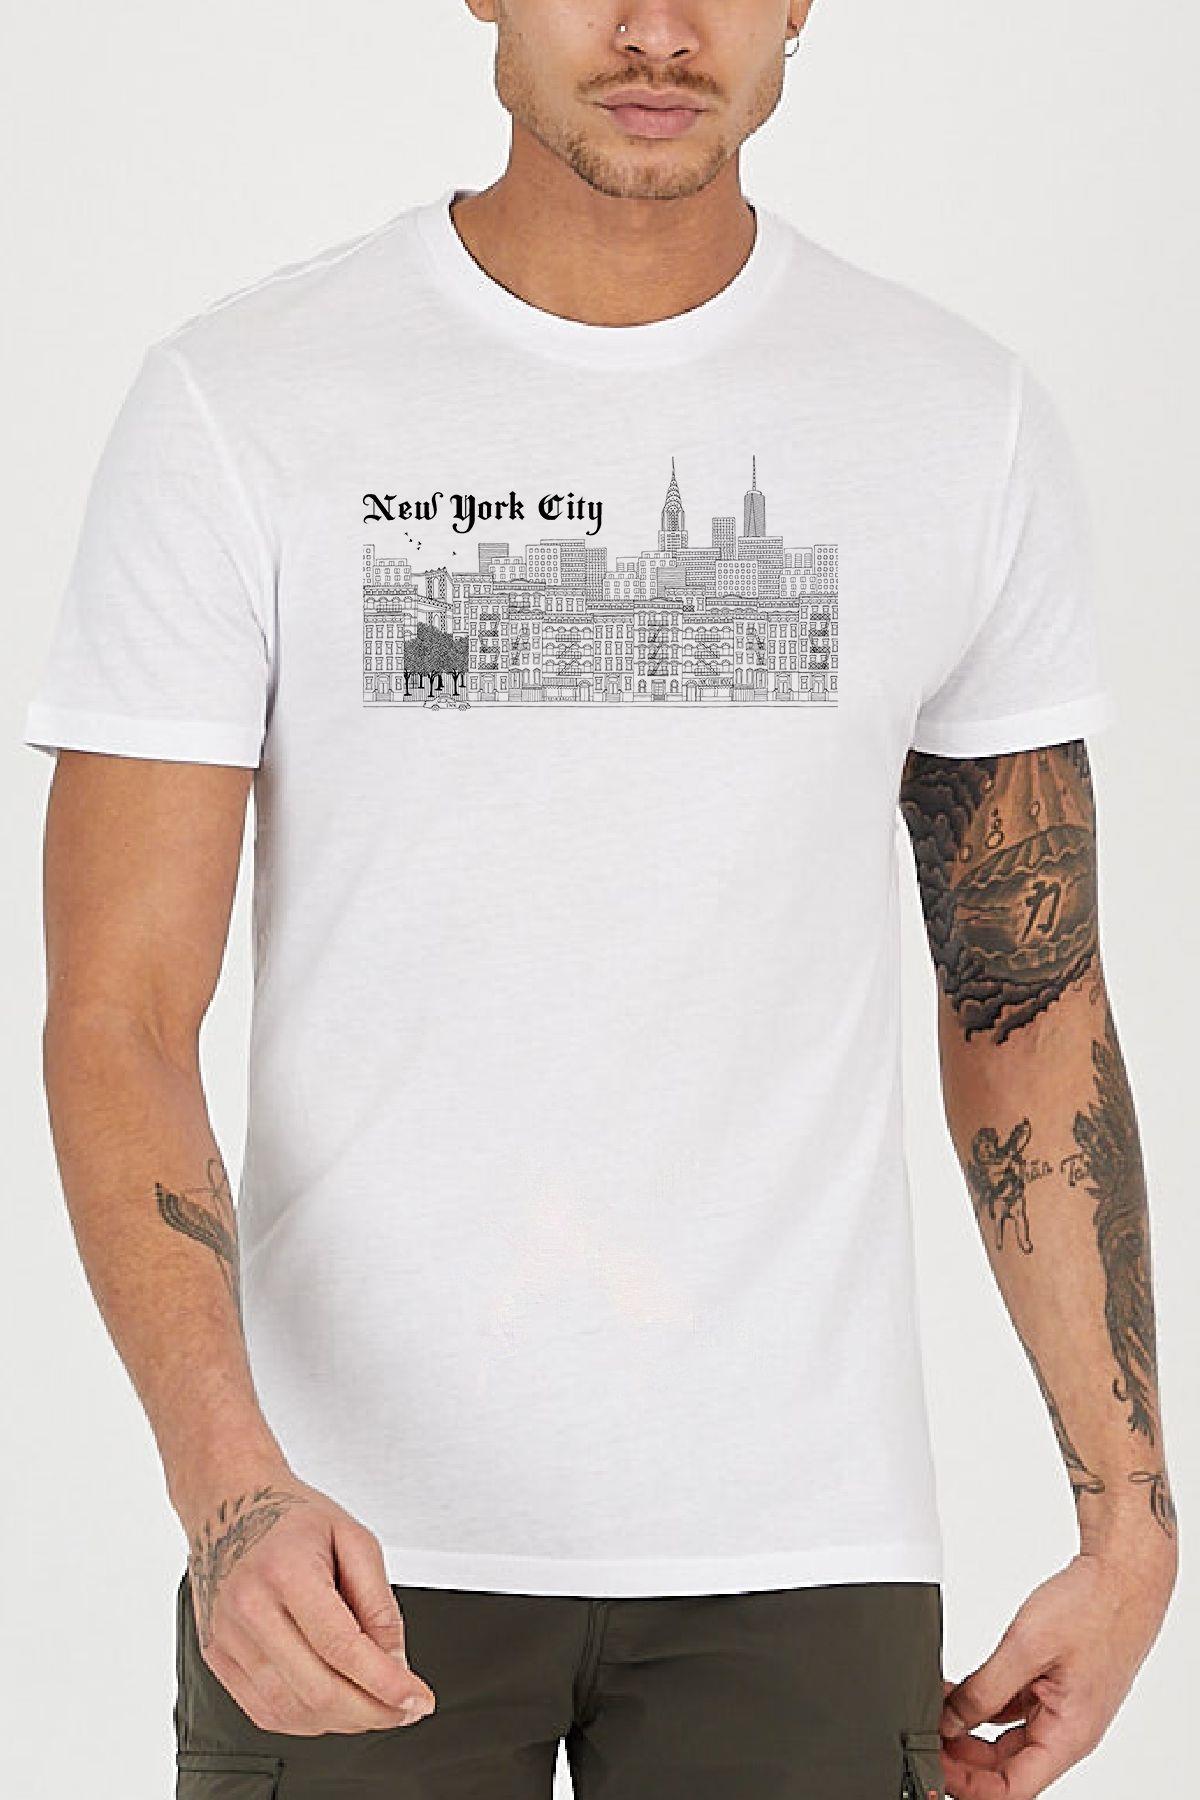 New York City Printed Crew Neck Men's T -shirt